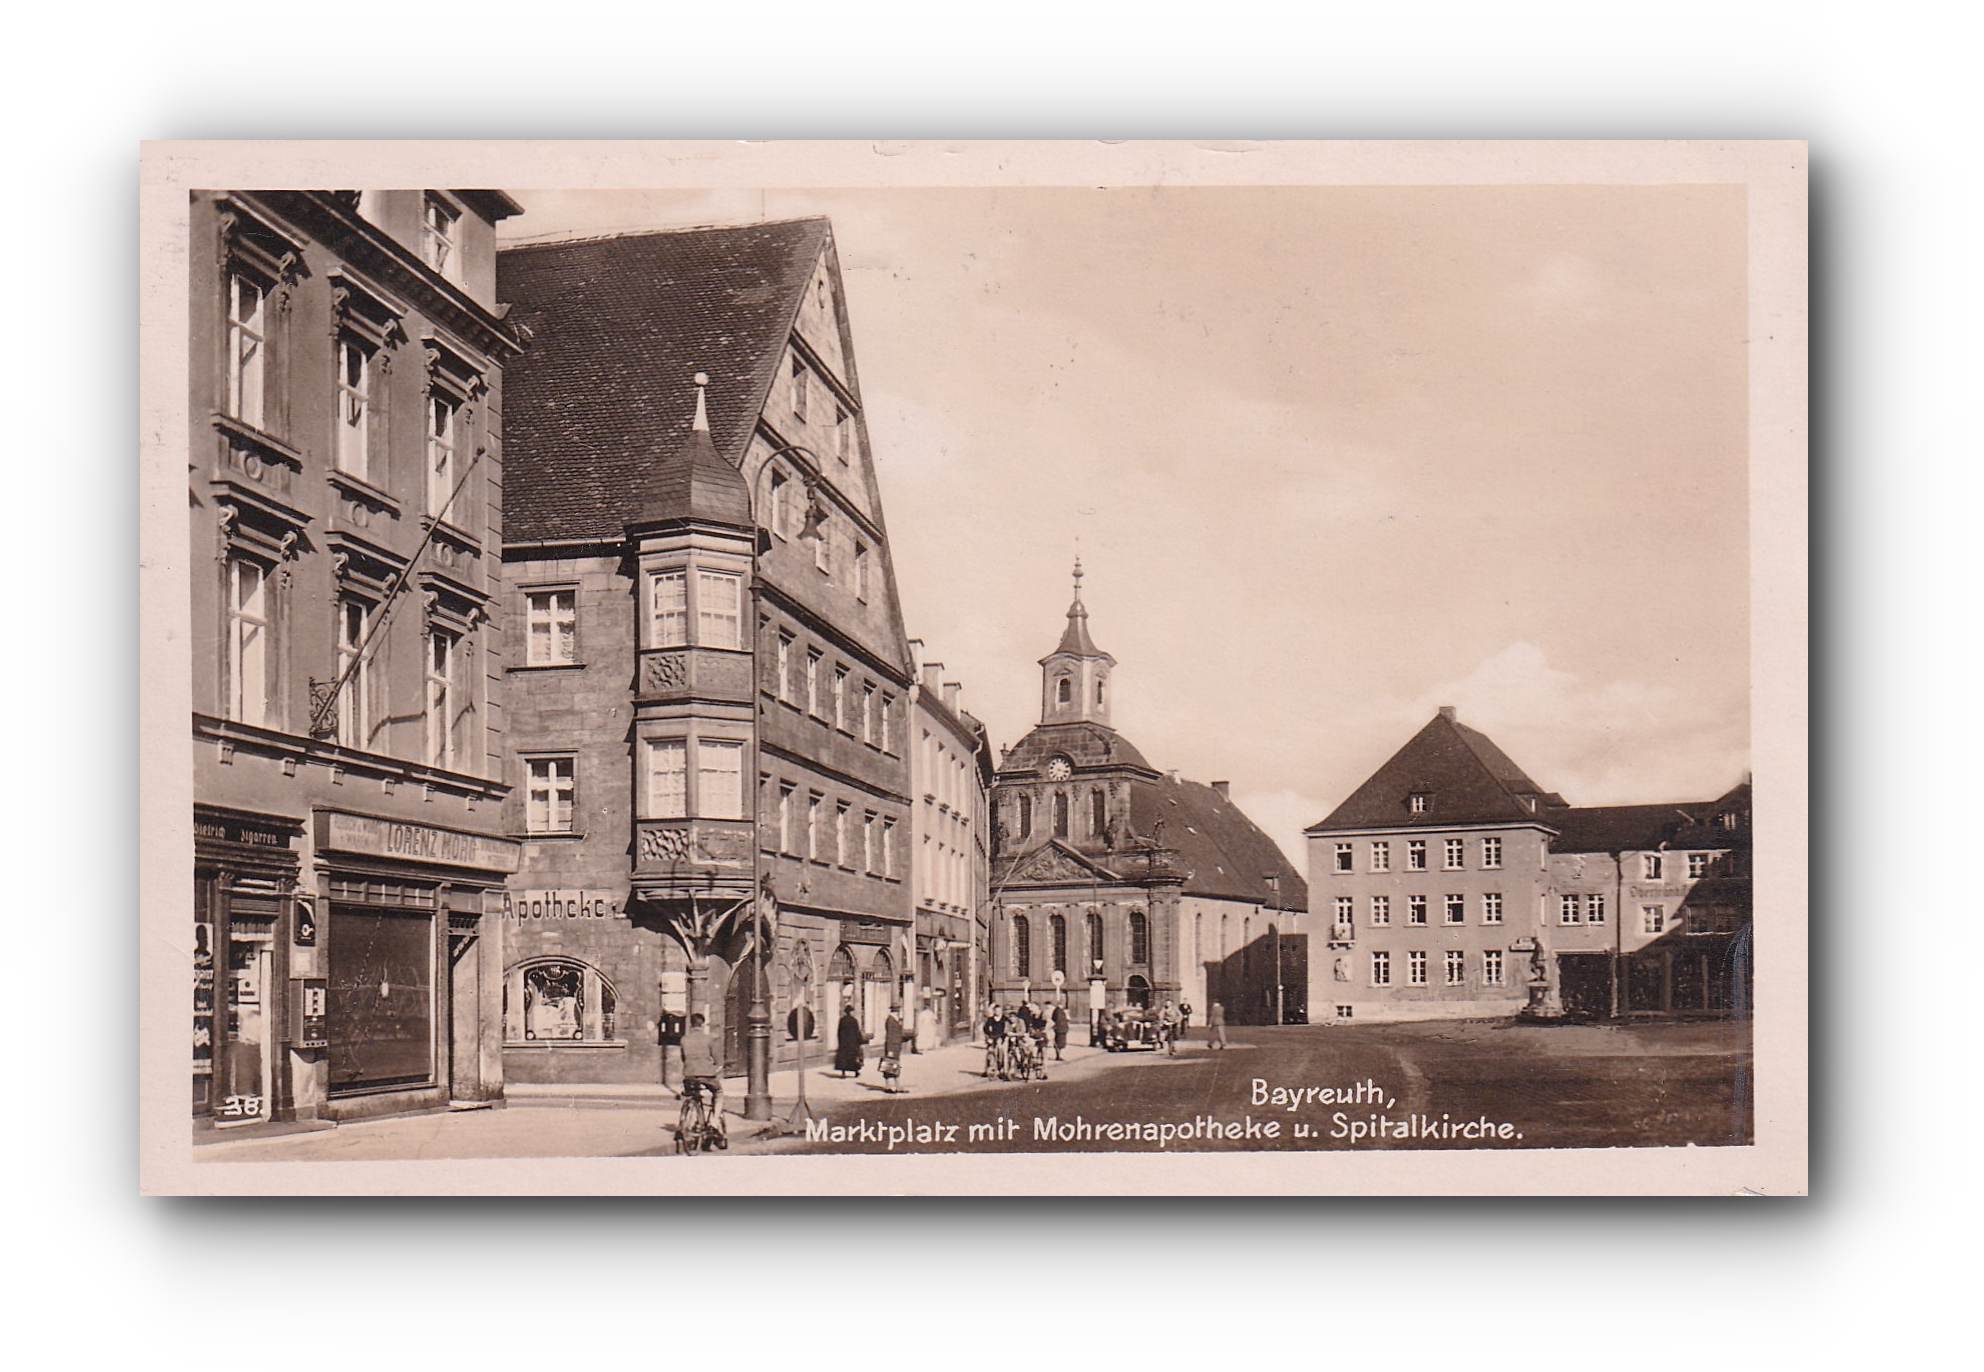 - BAYREUTH - Marktplatz mit Mohrenapotheke - 31.01.1939 -